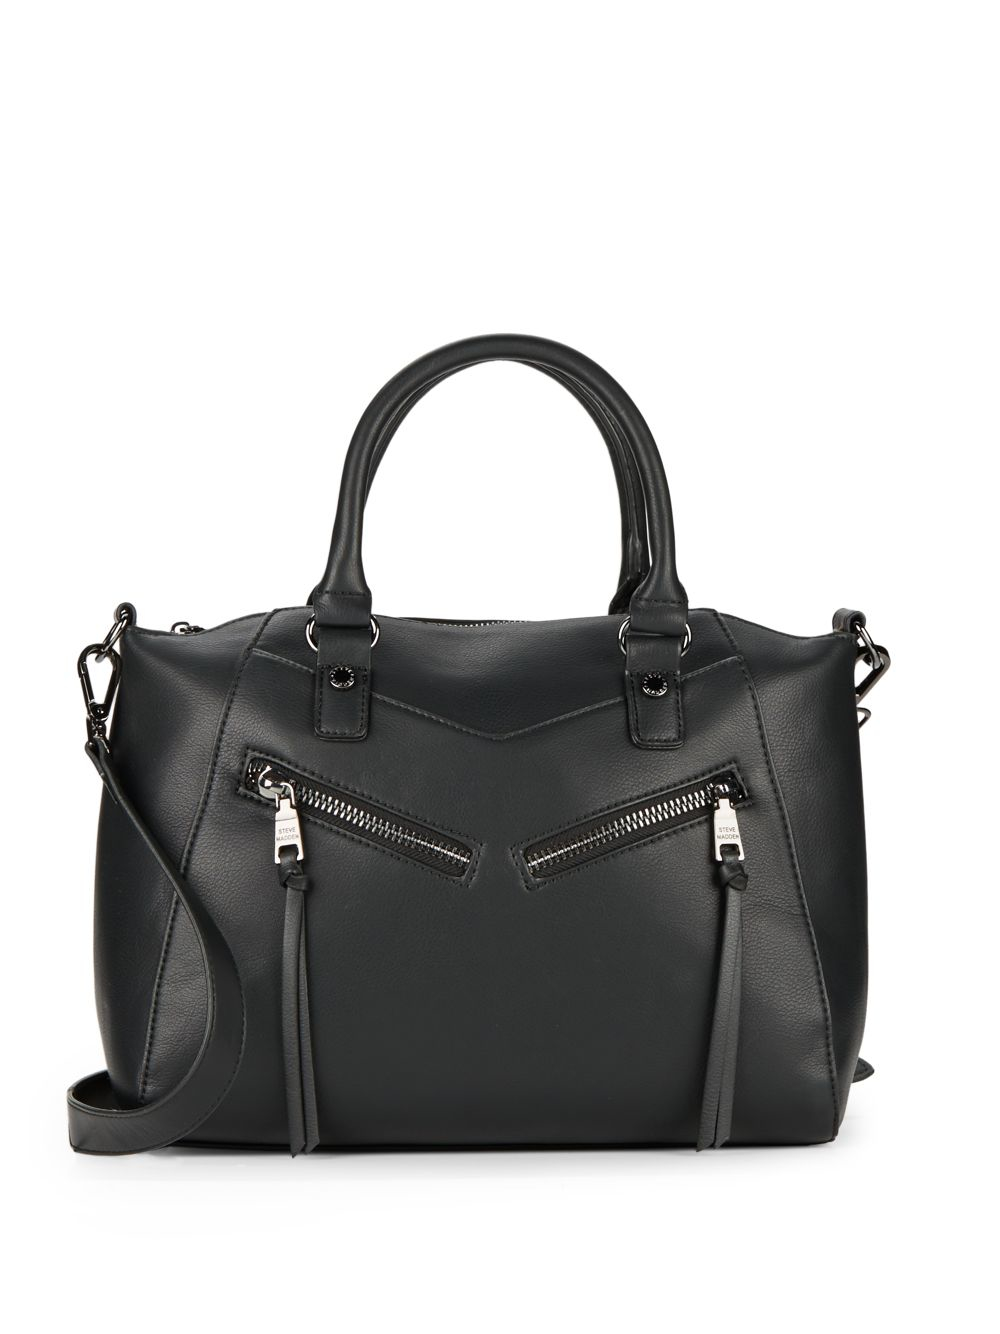 Lyst - Steve Madden Selene Zip Top-handle Bag in Black